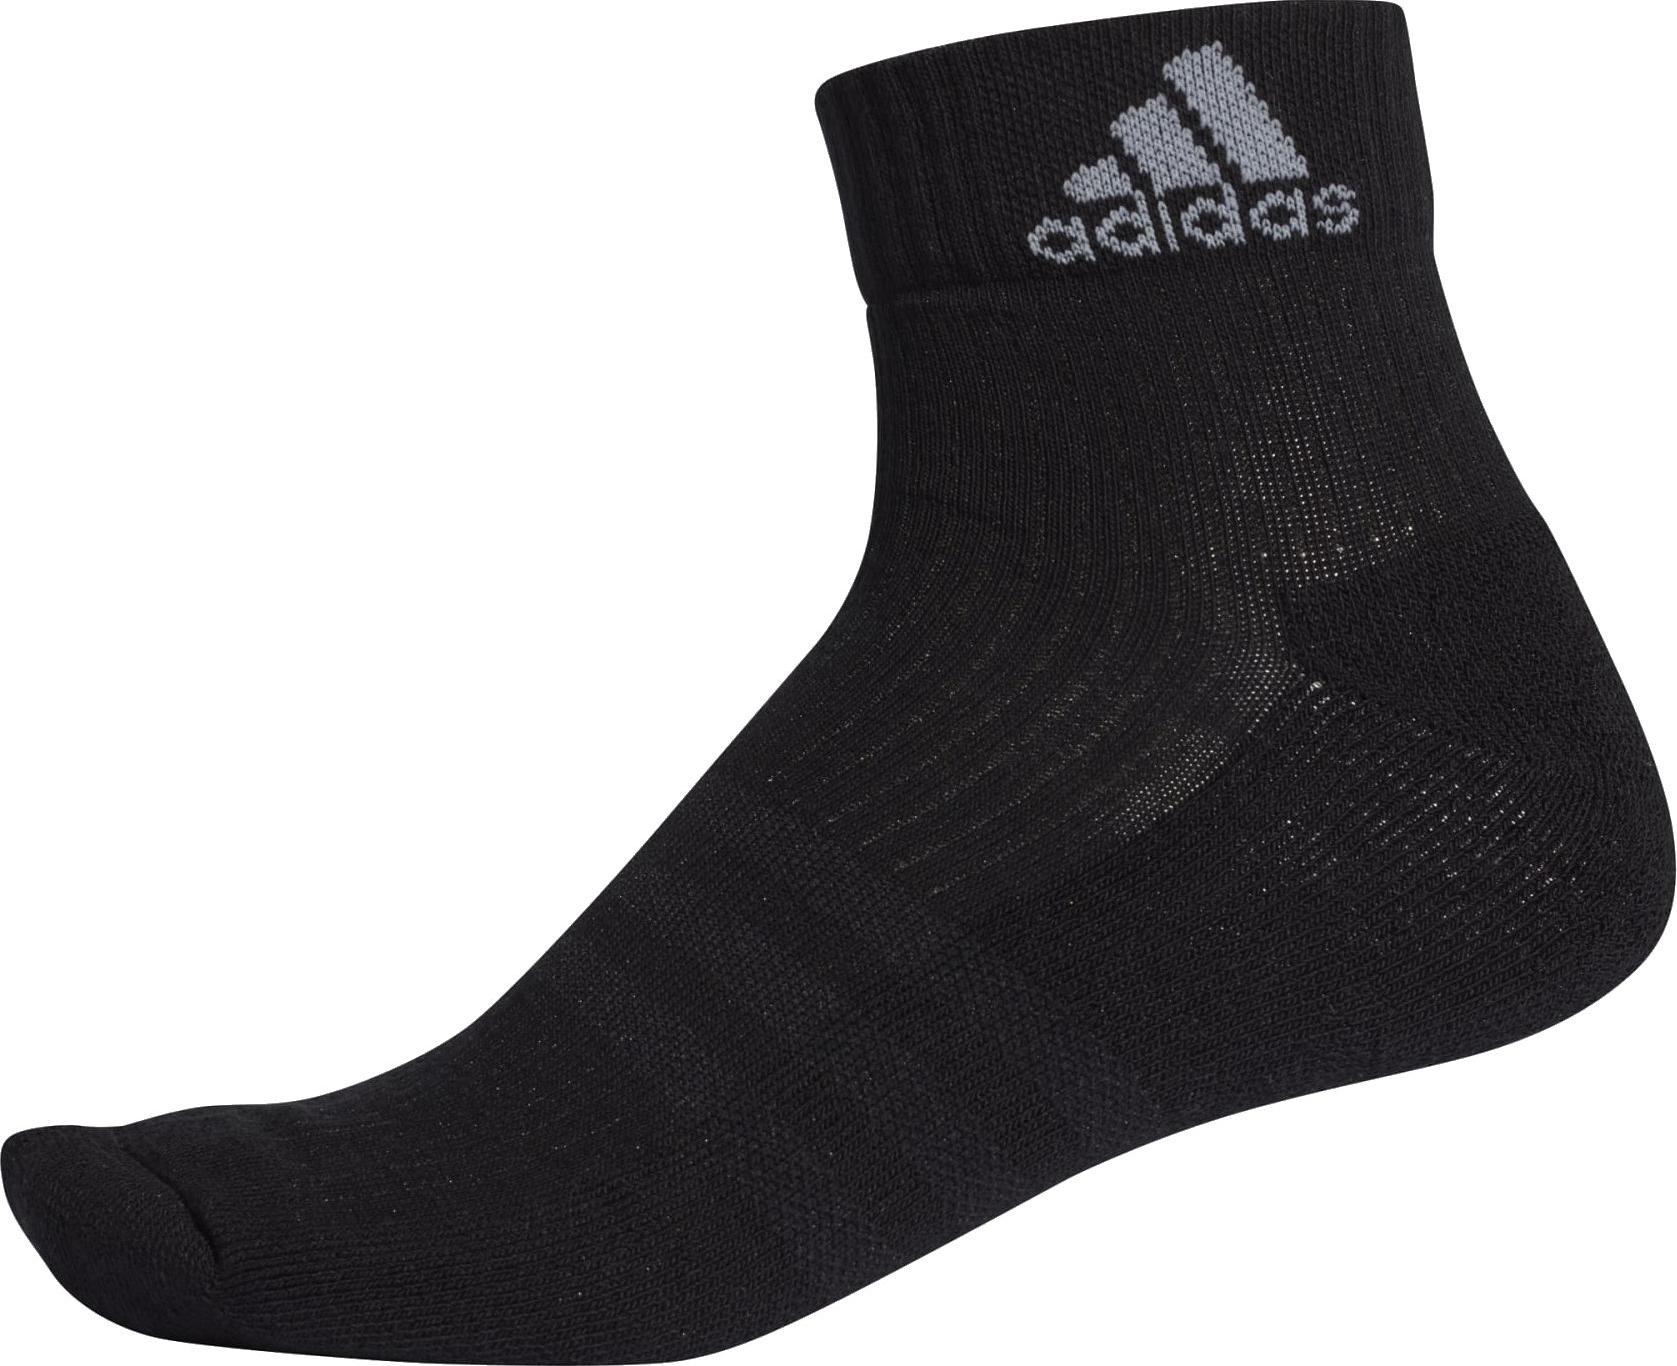 Socks adidas 3S Per An HC 3p 